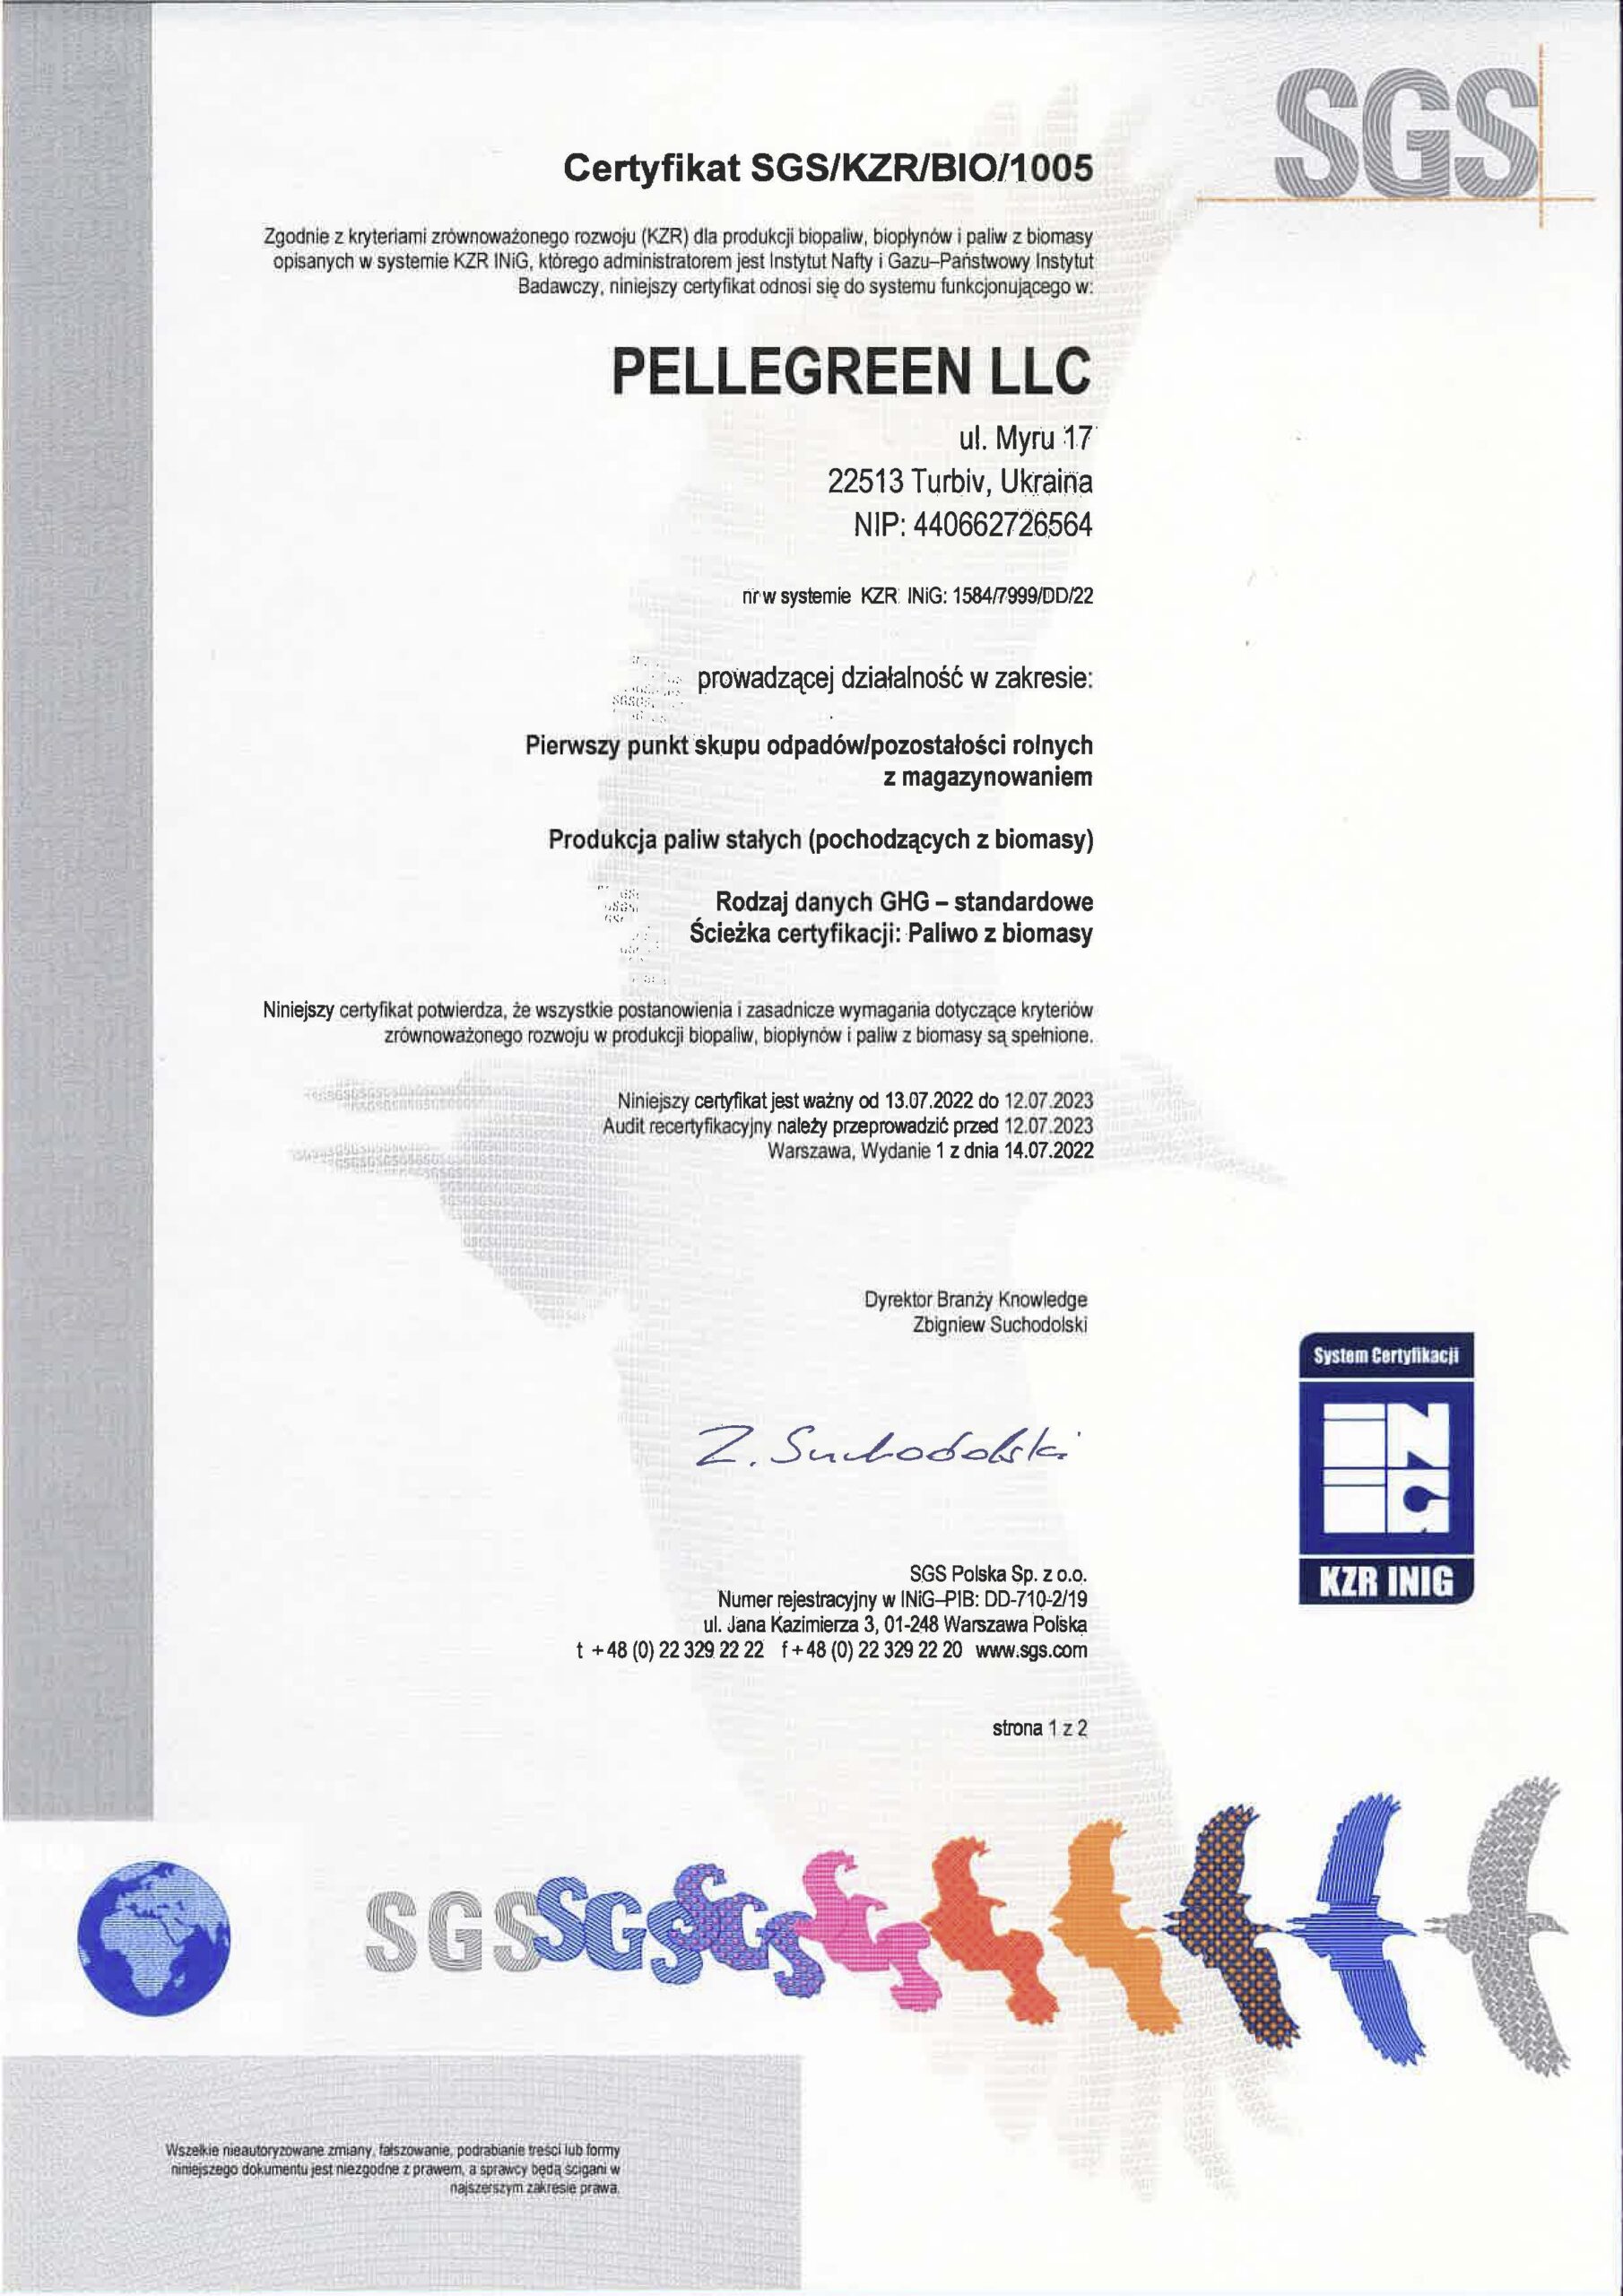 Certificate SGS KZR BIO